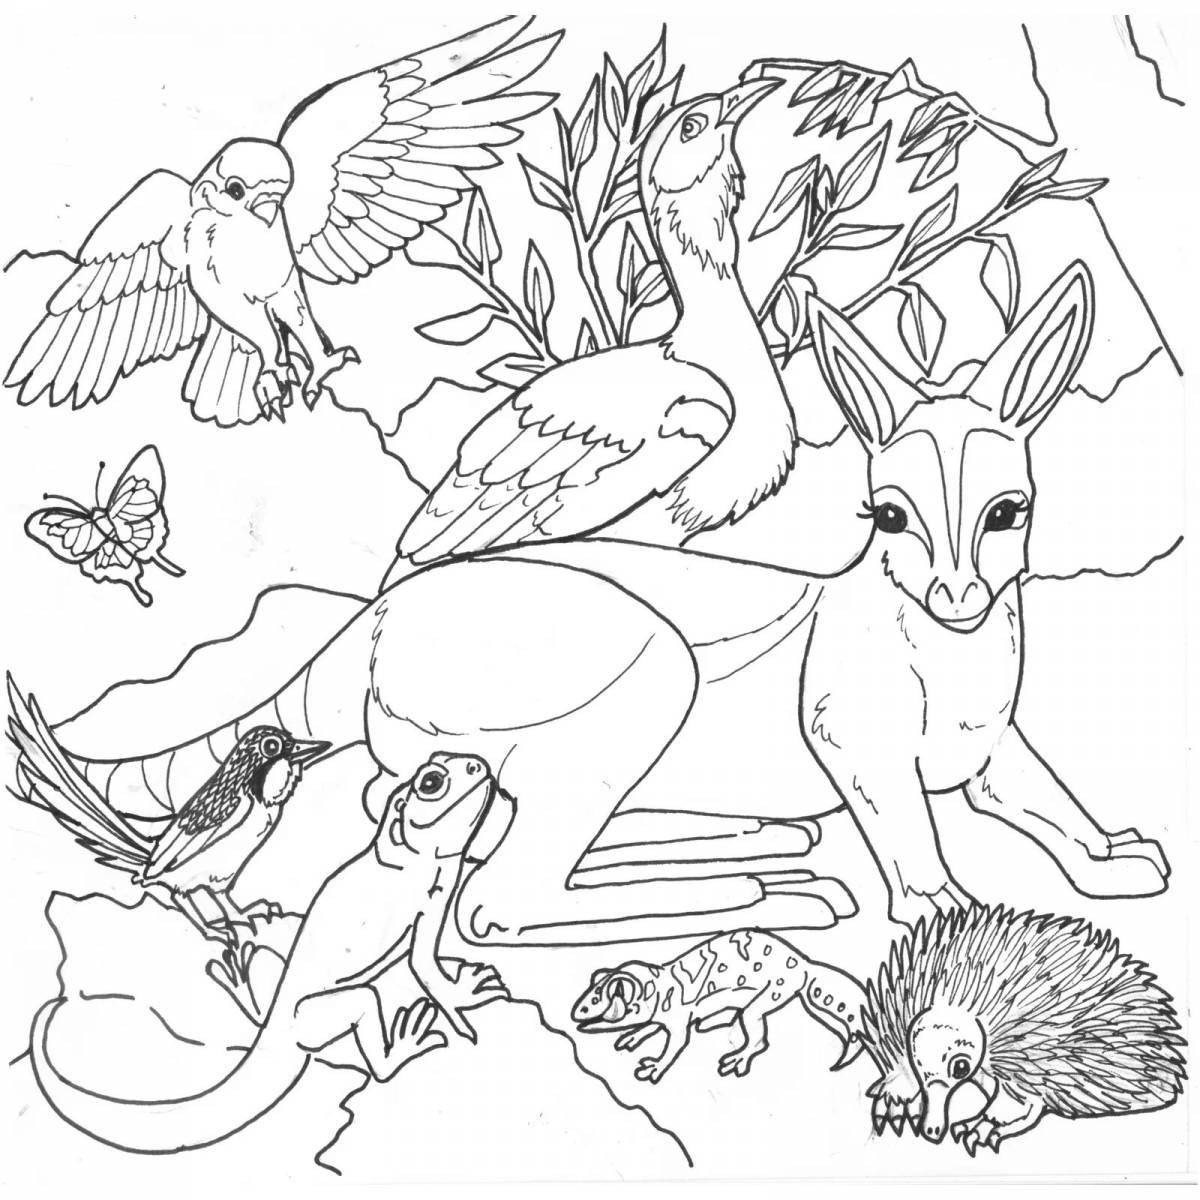 Wonderful Australian animal coloring book for kids